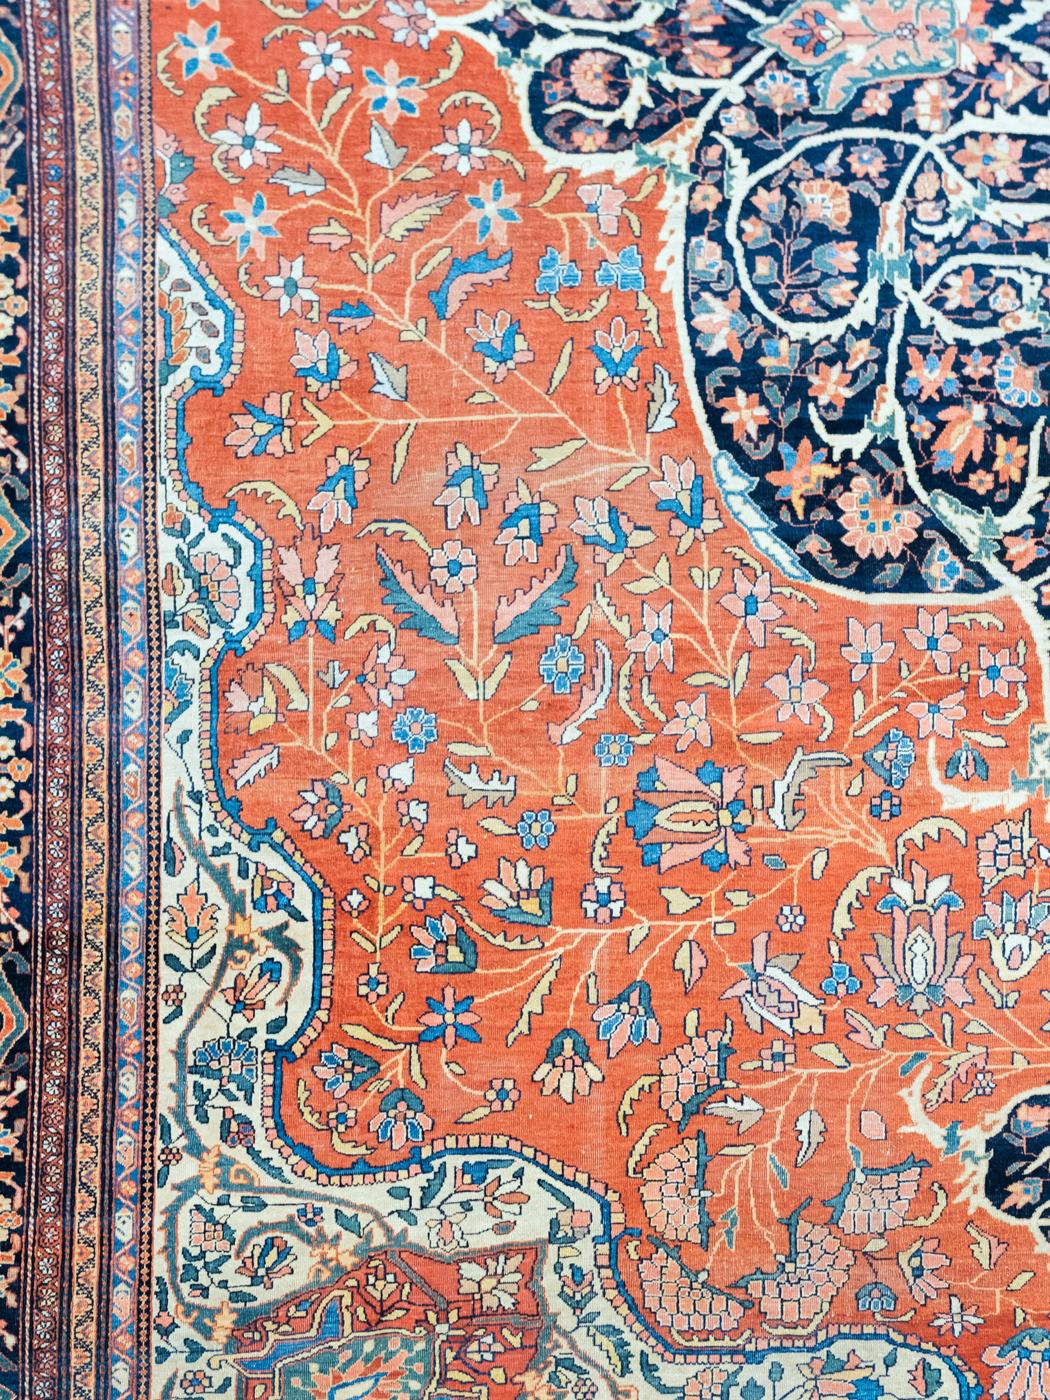 Late 19th Century Antique Wool Persian Farahan Carpet, Red, Orange, Indigo, 10’ x 14’ For Sale